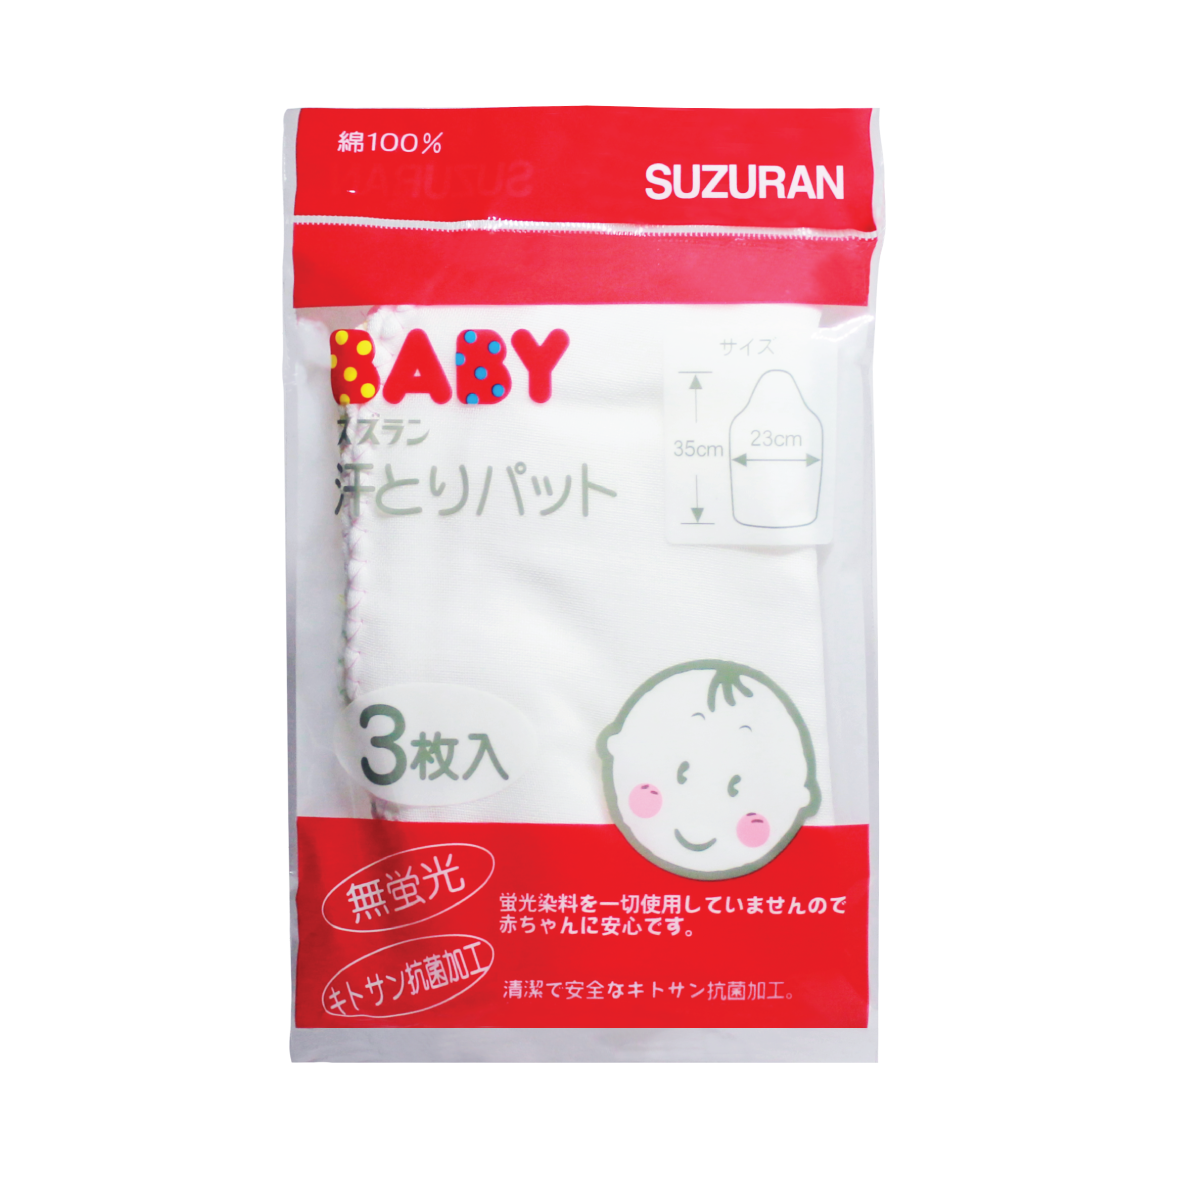 Suzuran Baby Gauze Sweat Pad 3 pcs | Little Baby.